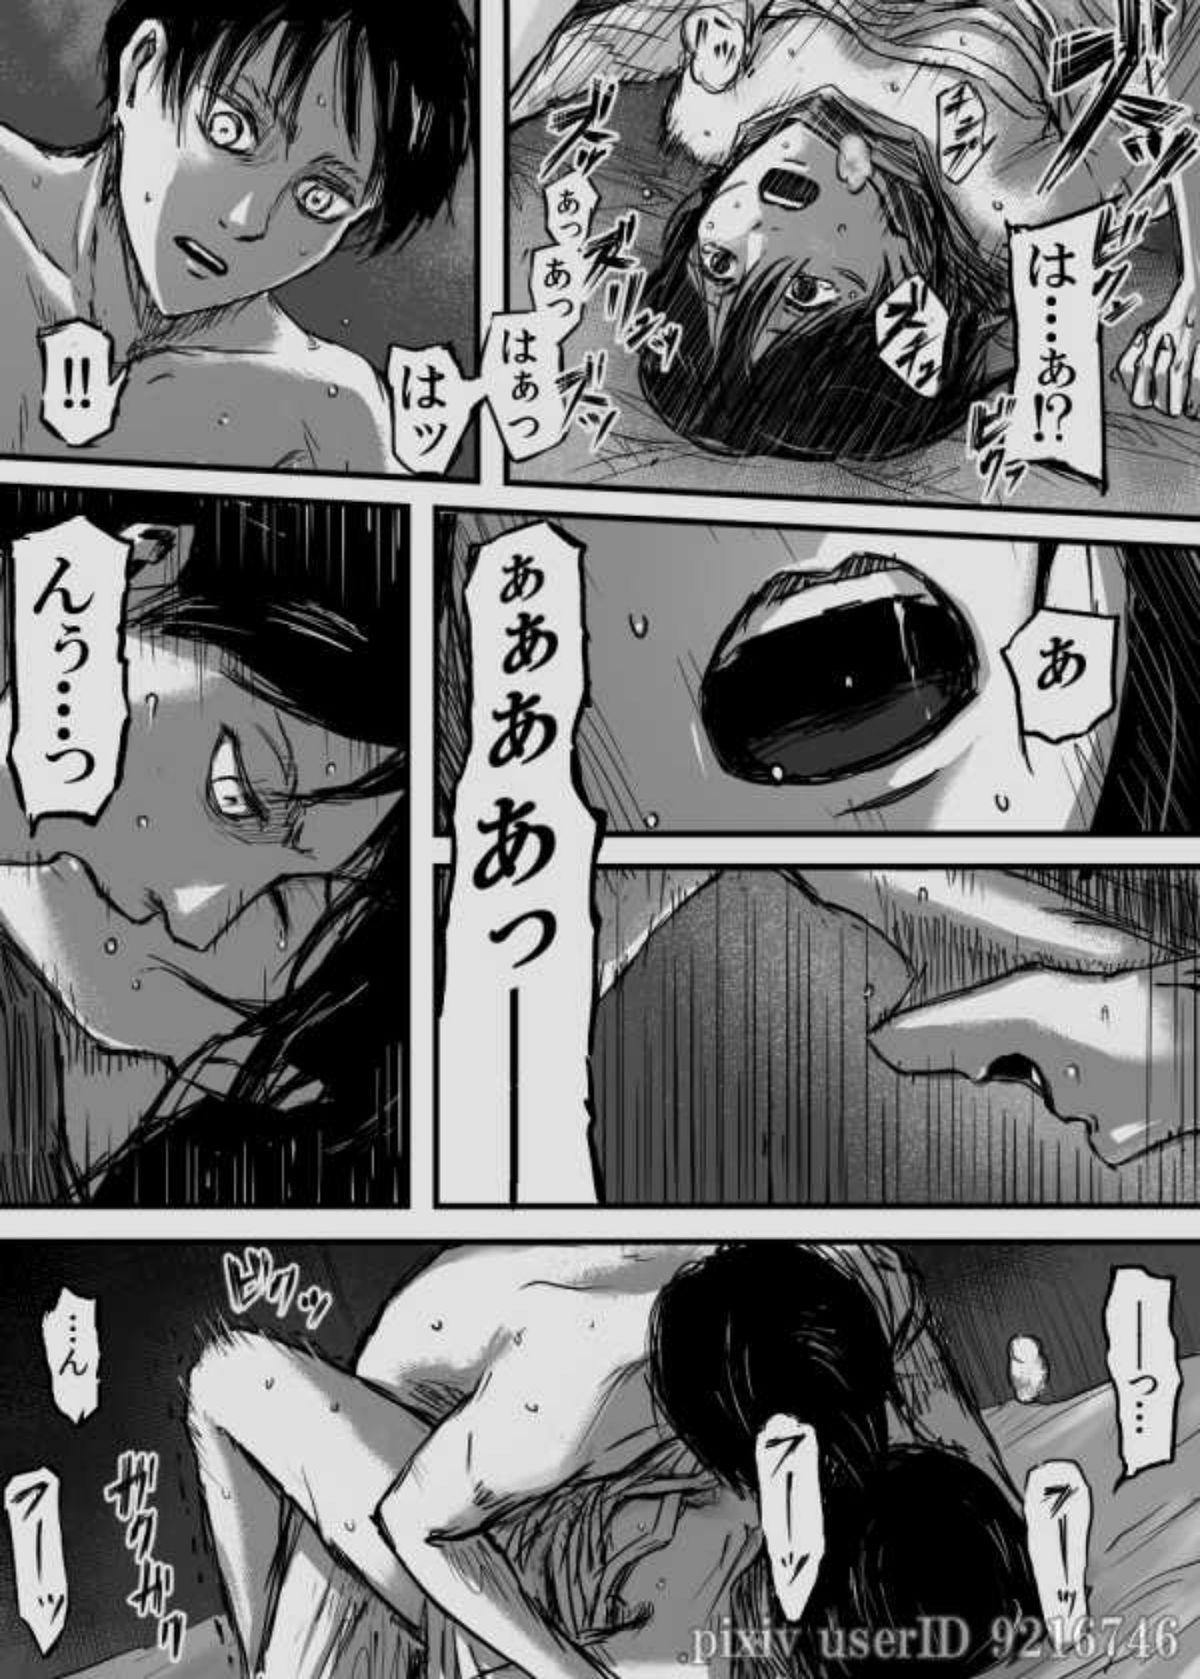 Staxxx 複製禁止 reproduction prohibited - Shingeki no kyojin Nasty Porn - Page 10